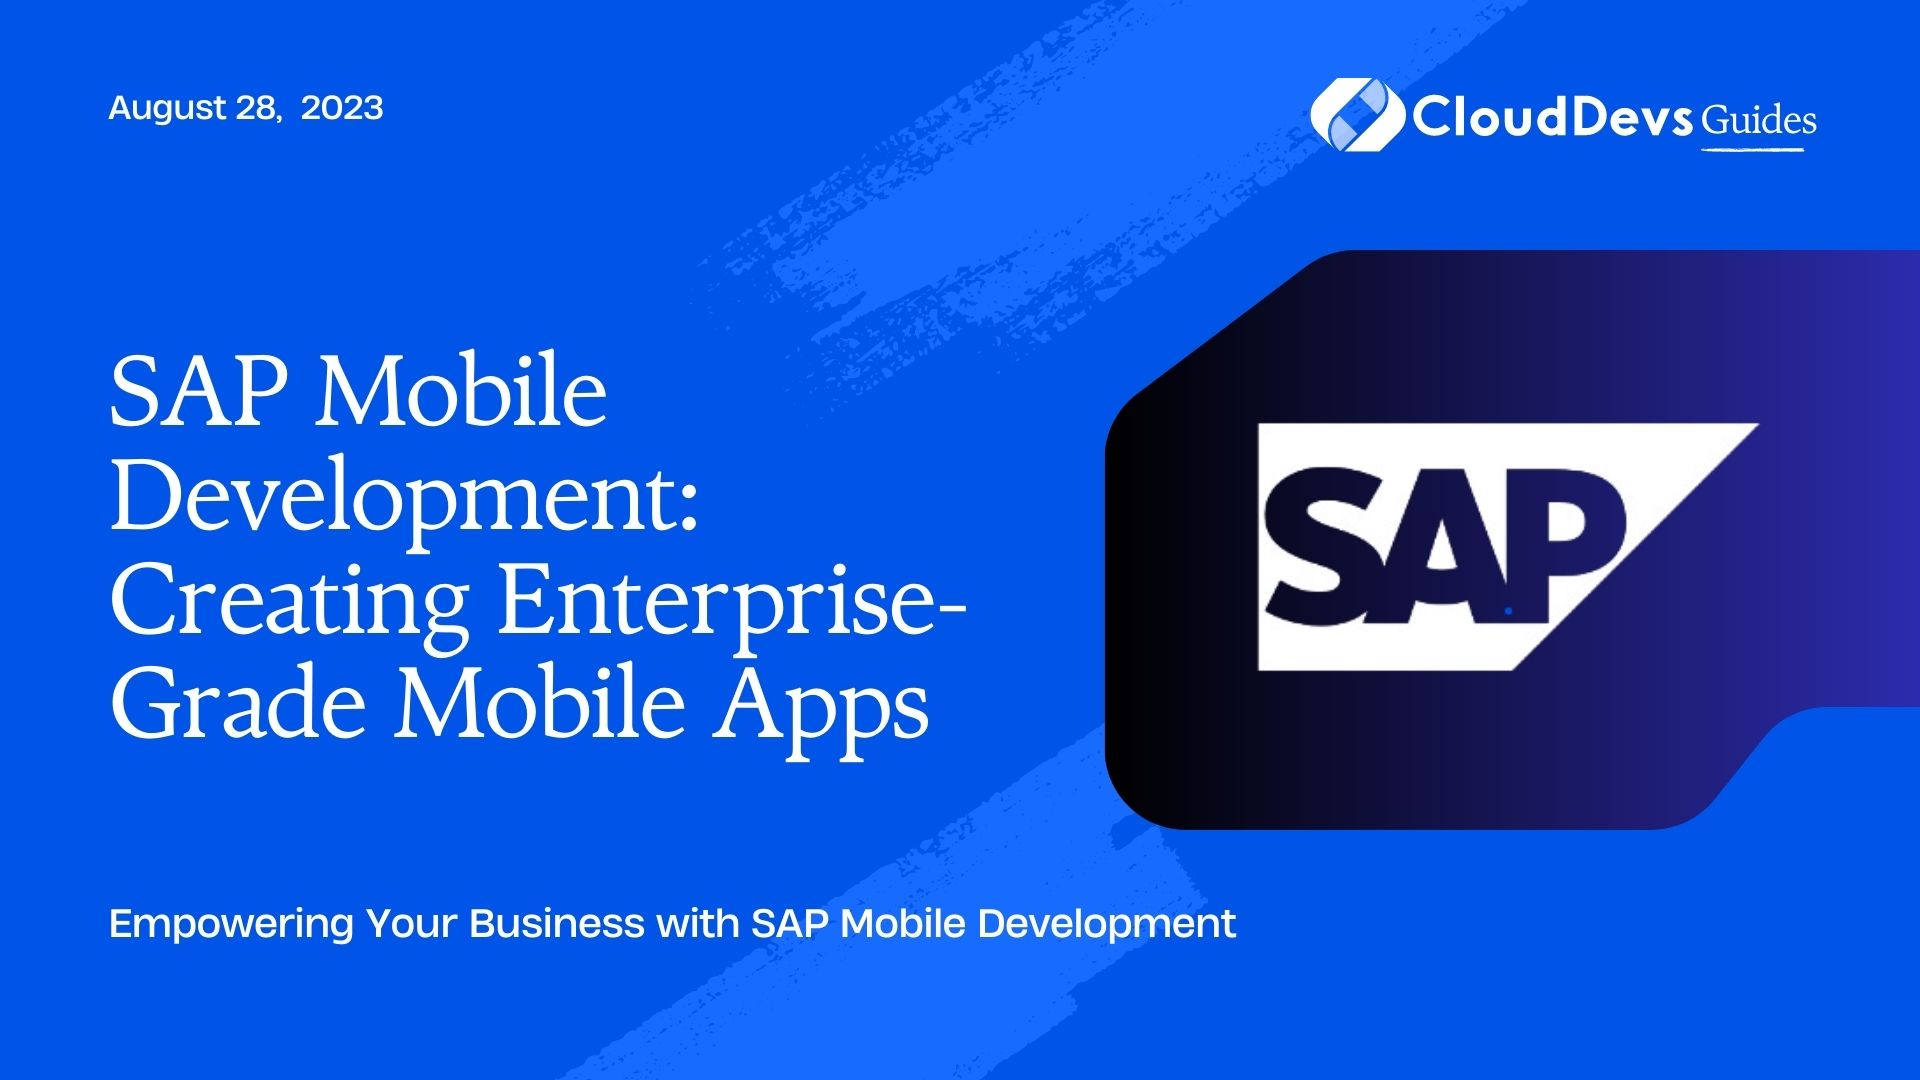 SAP Mobile Development: Creating Enterprise-Grade Mobile Apps